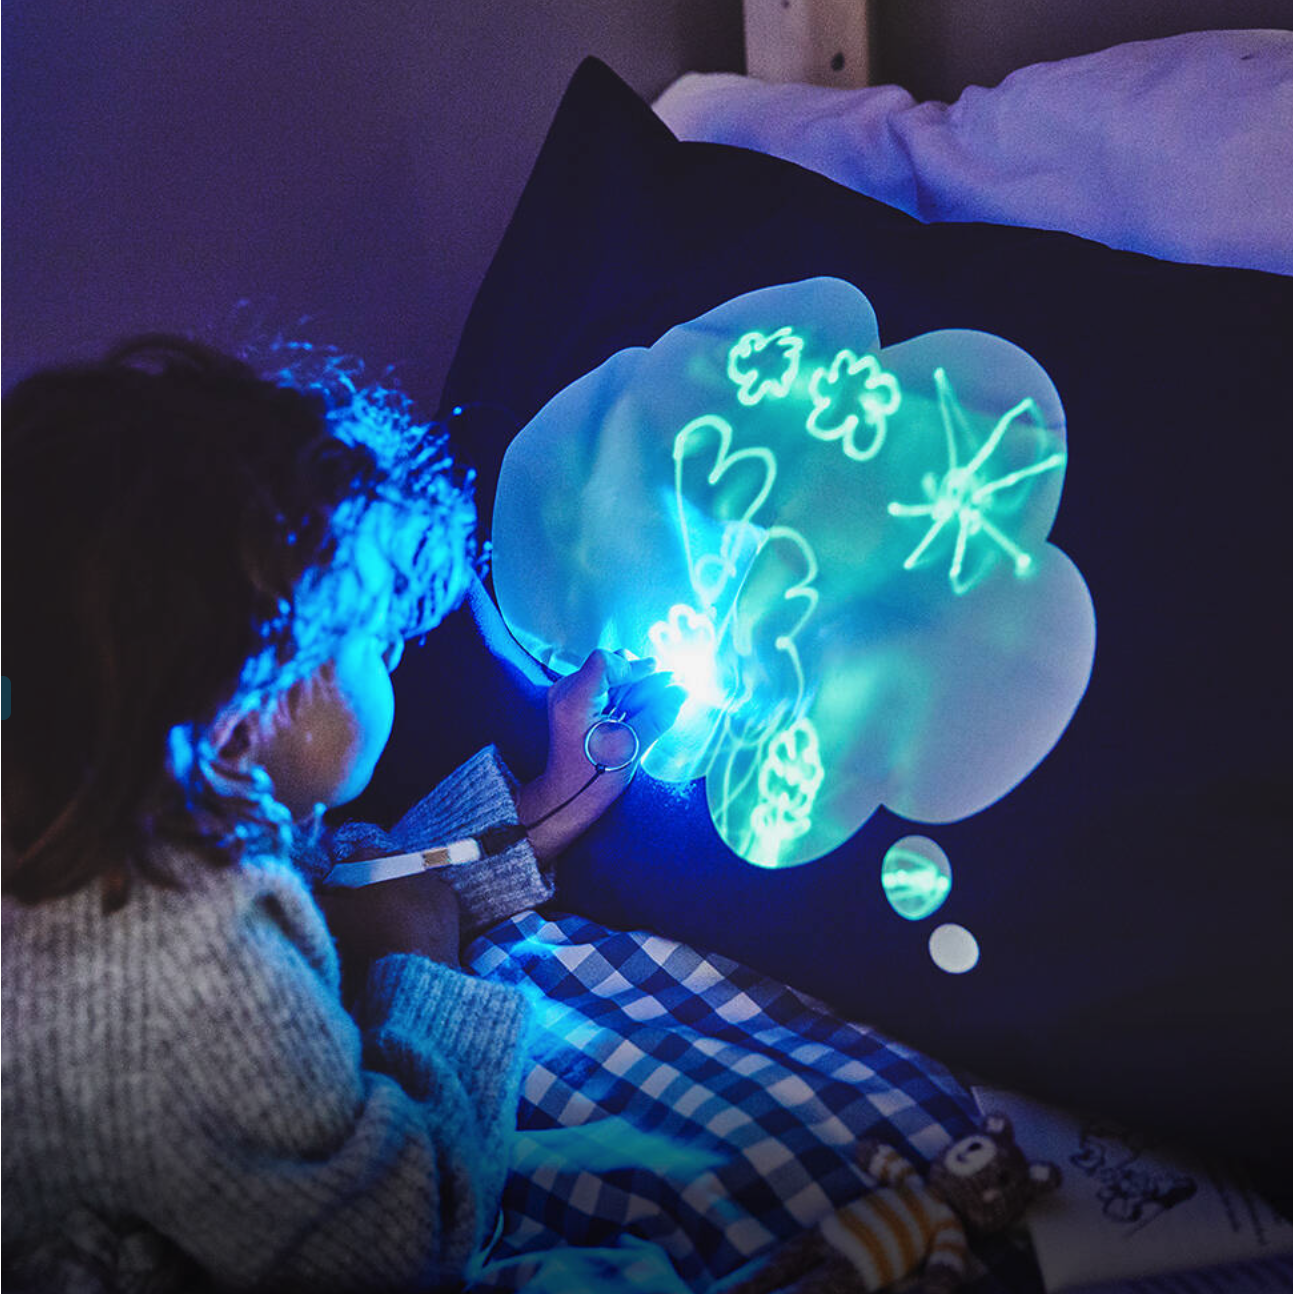 Illuminated Doodle Magic Board – Smart Kids Planet